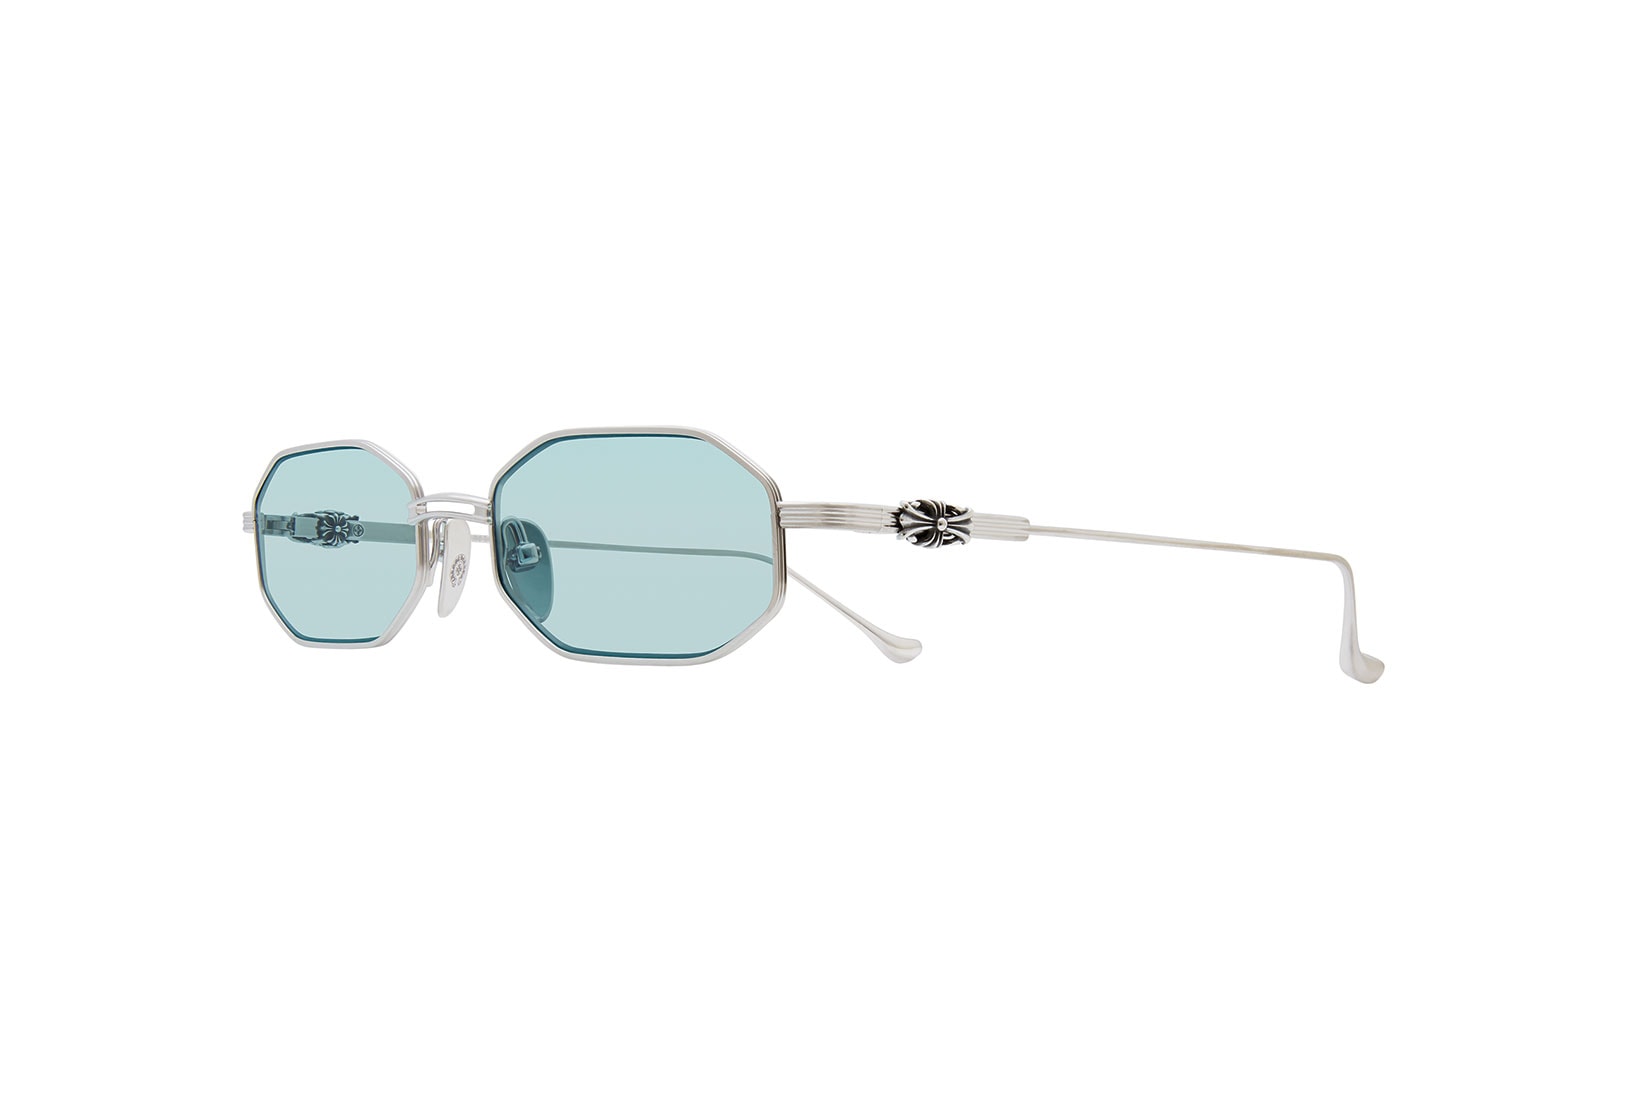 chrome hearts jordan barrett sunglasses capsule collection eyewear supermodel jesse jo stark